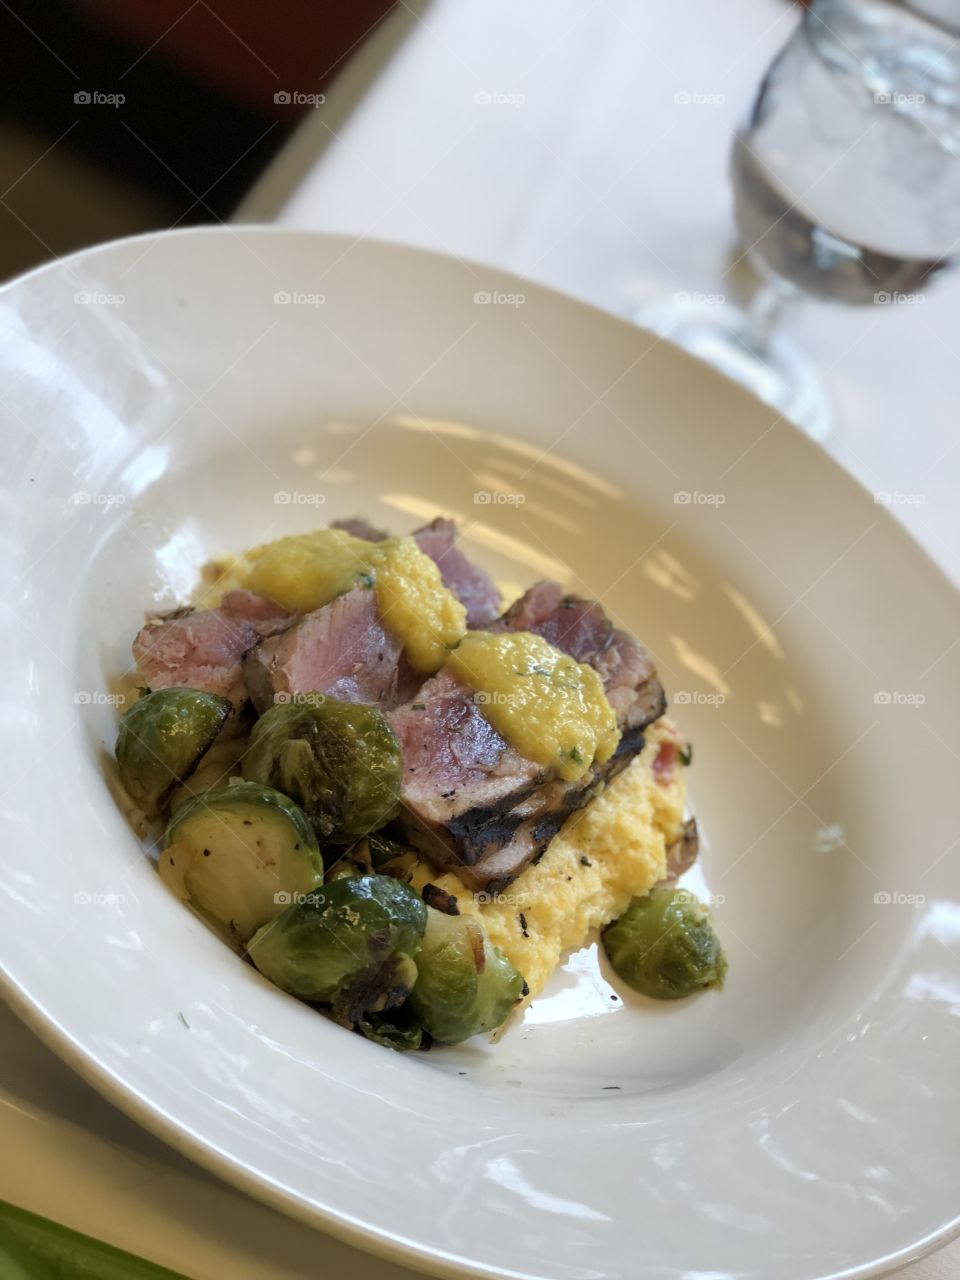 Tuna steak dish w/ Brussels sprouts and polenta